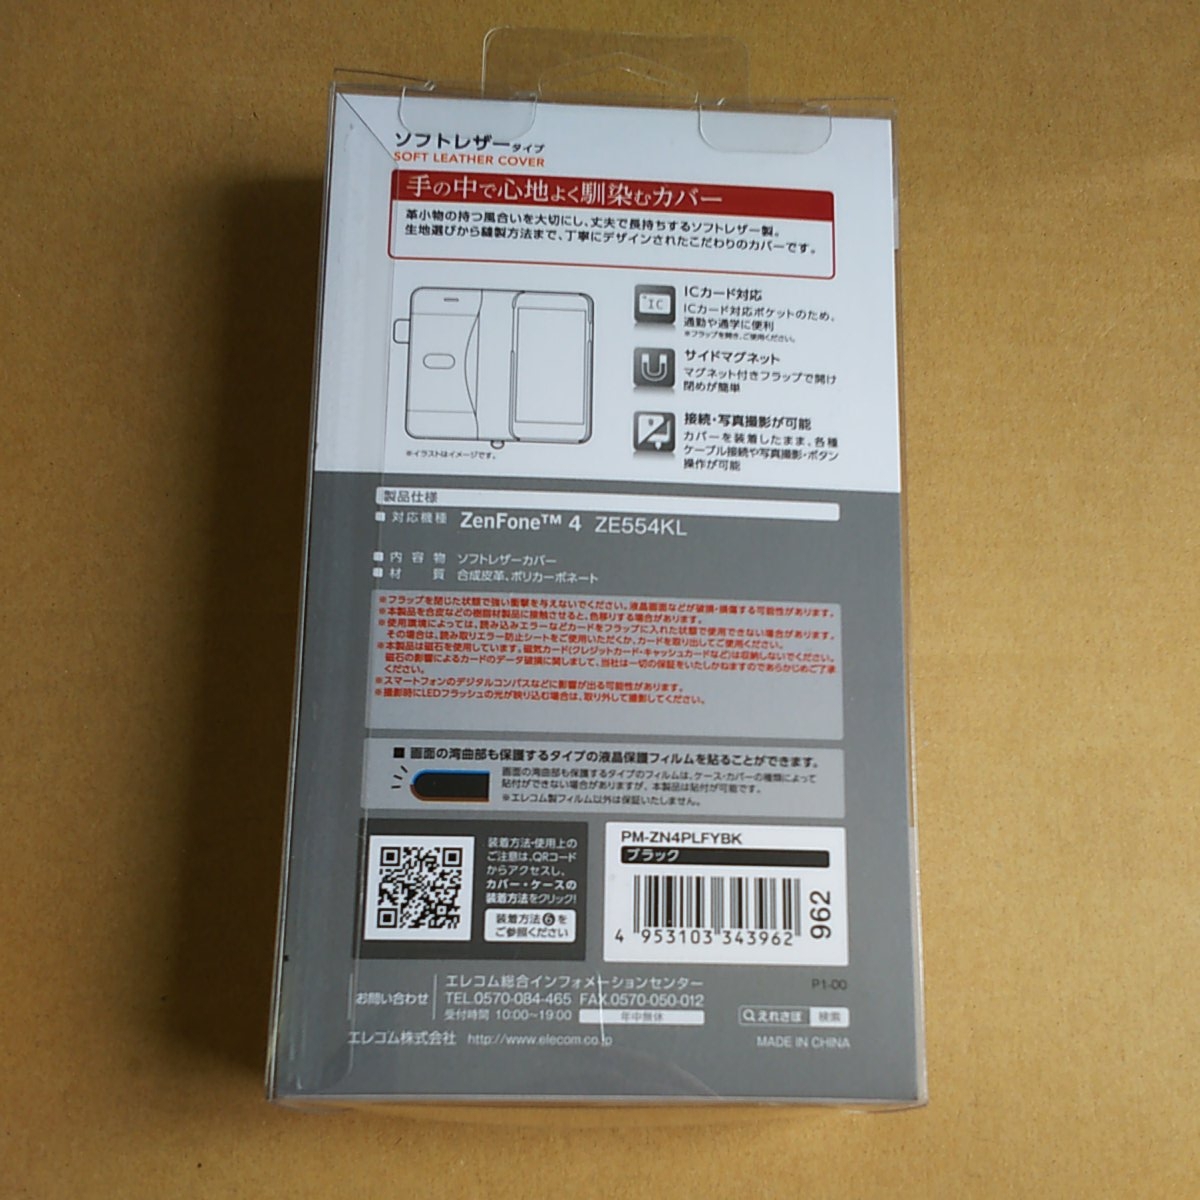 ◎ELECOM ZenFone 4 ケース Vluno 手帳型 ソフトレザーカバー 磁石付 ブラック PM-ZN4PLFYBK